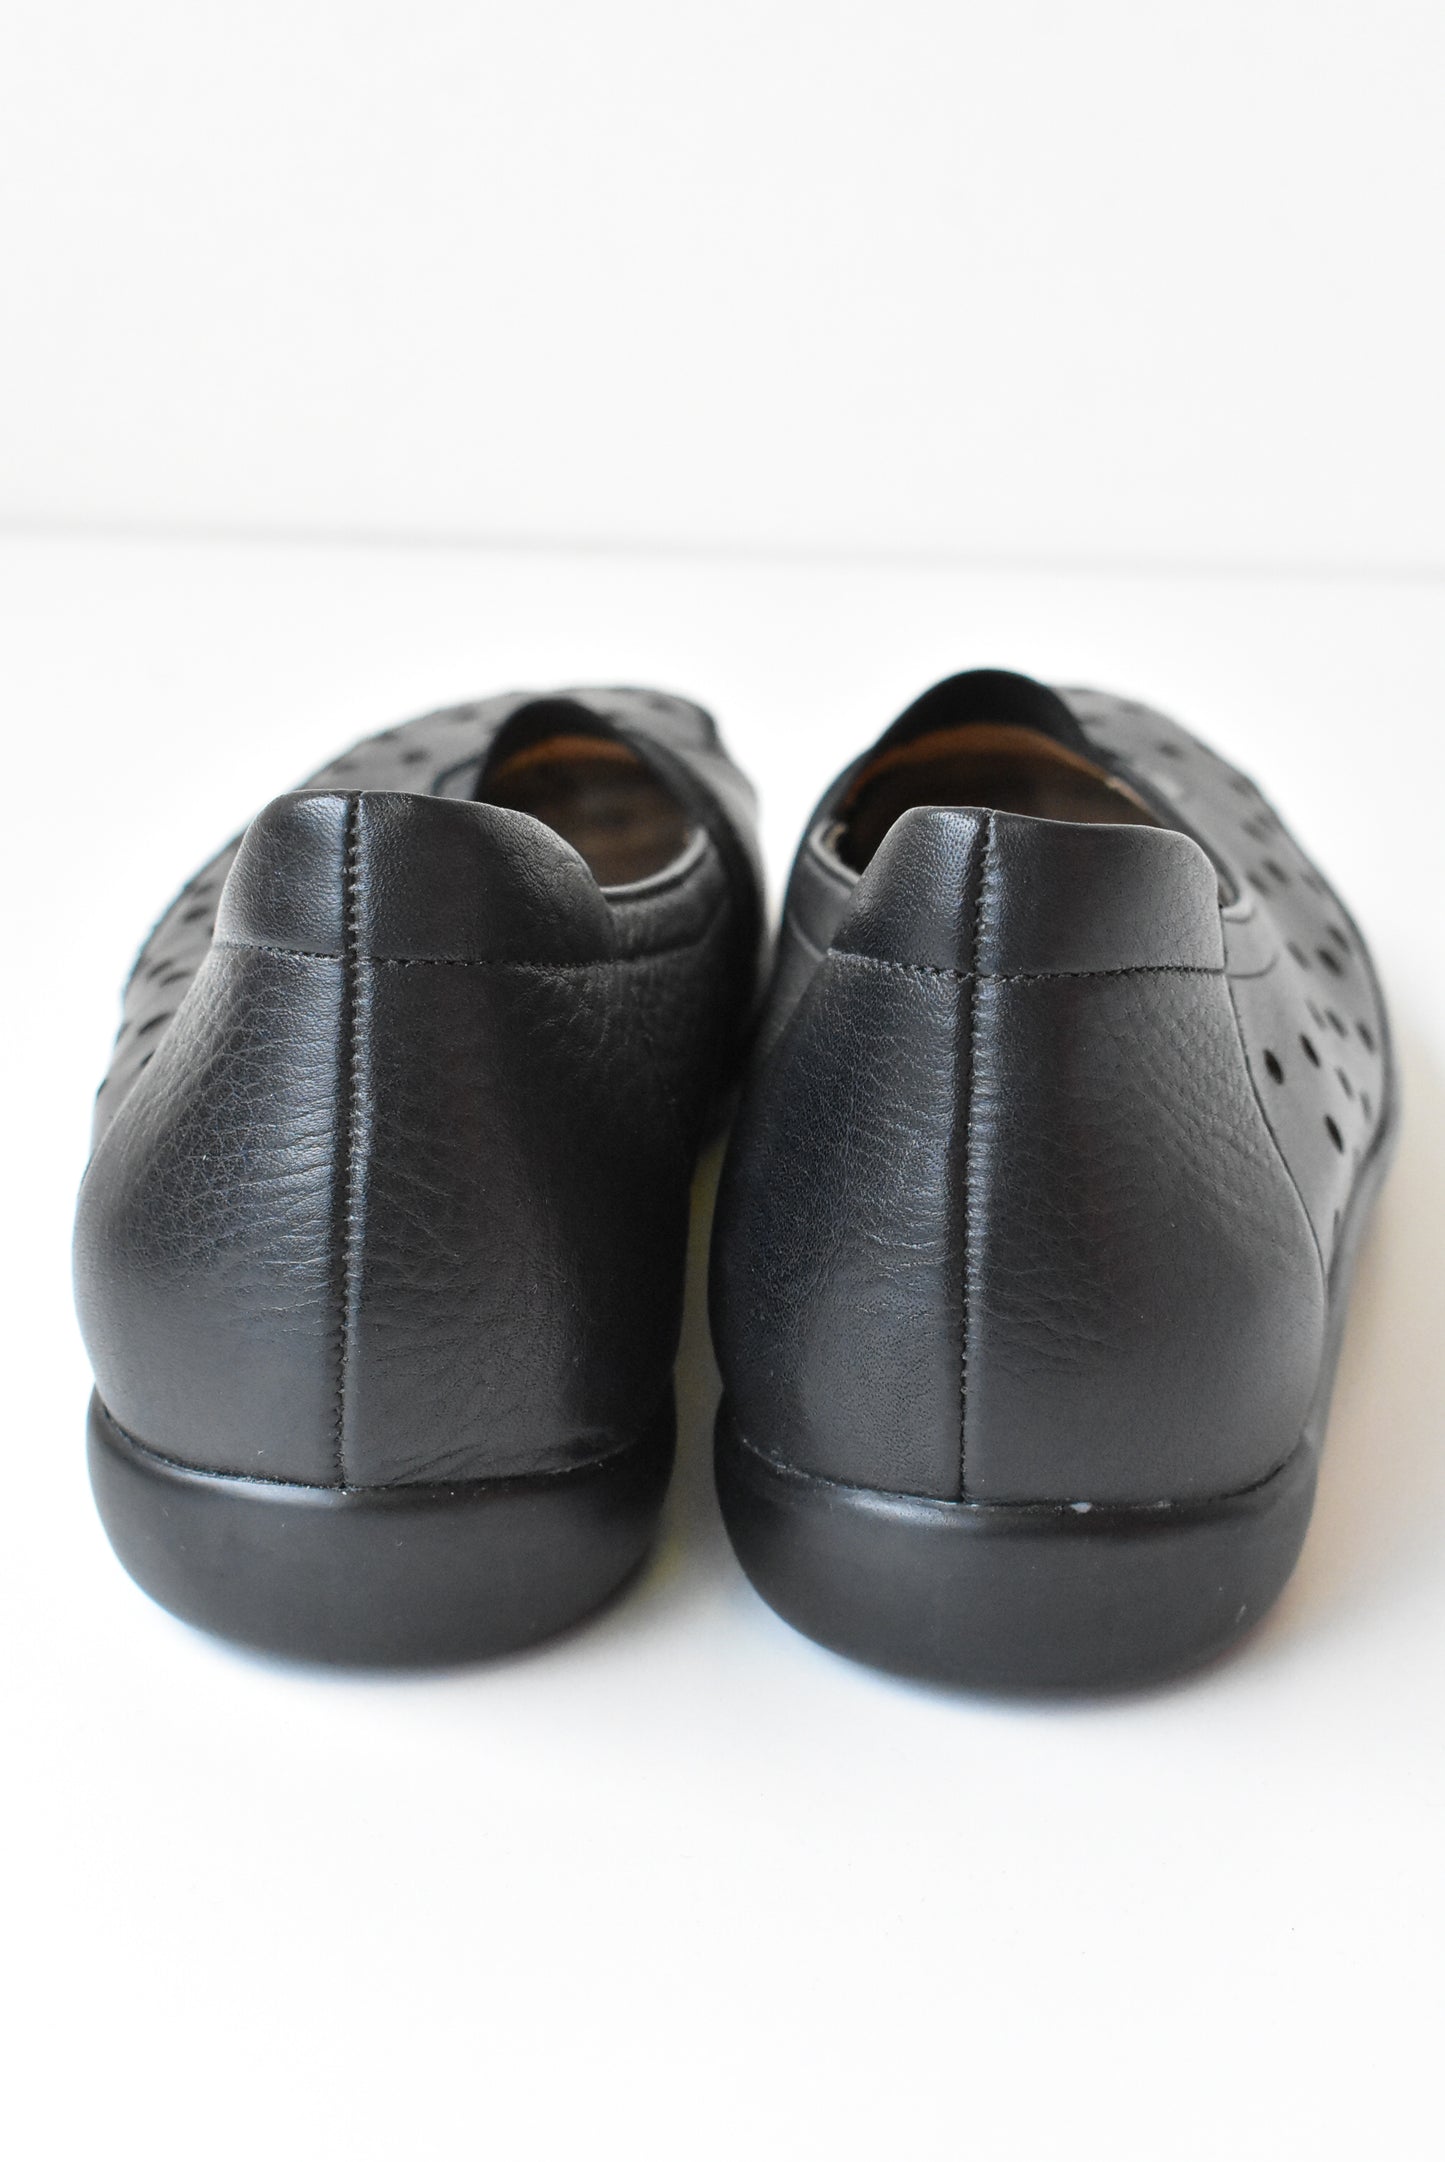 Ziera Black slip on shoes Size 38